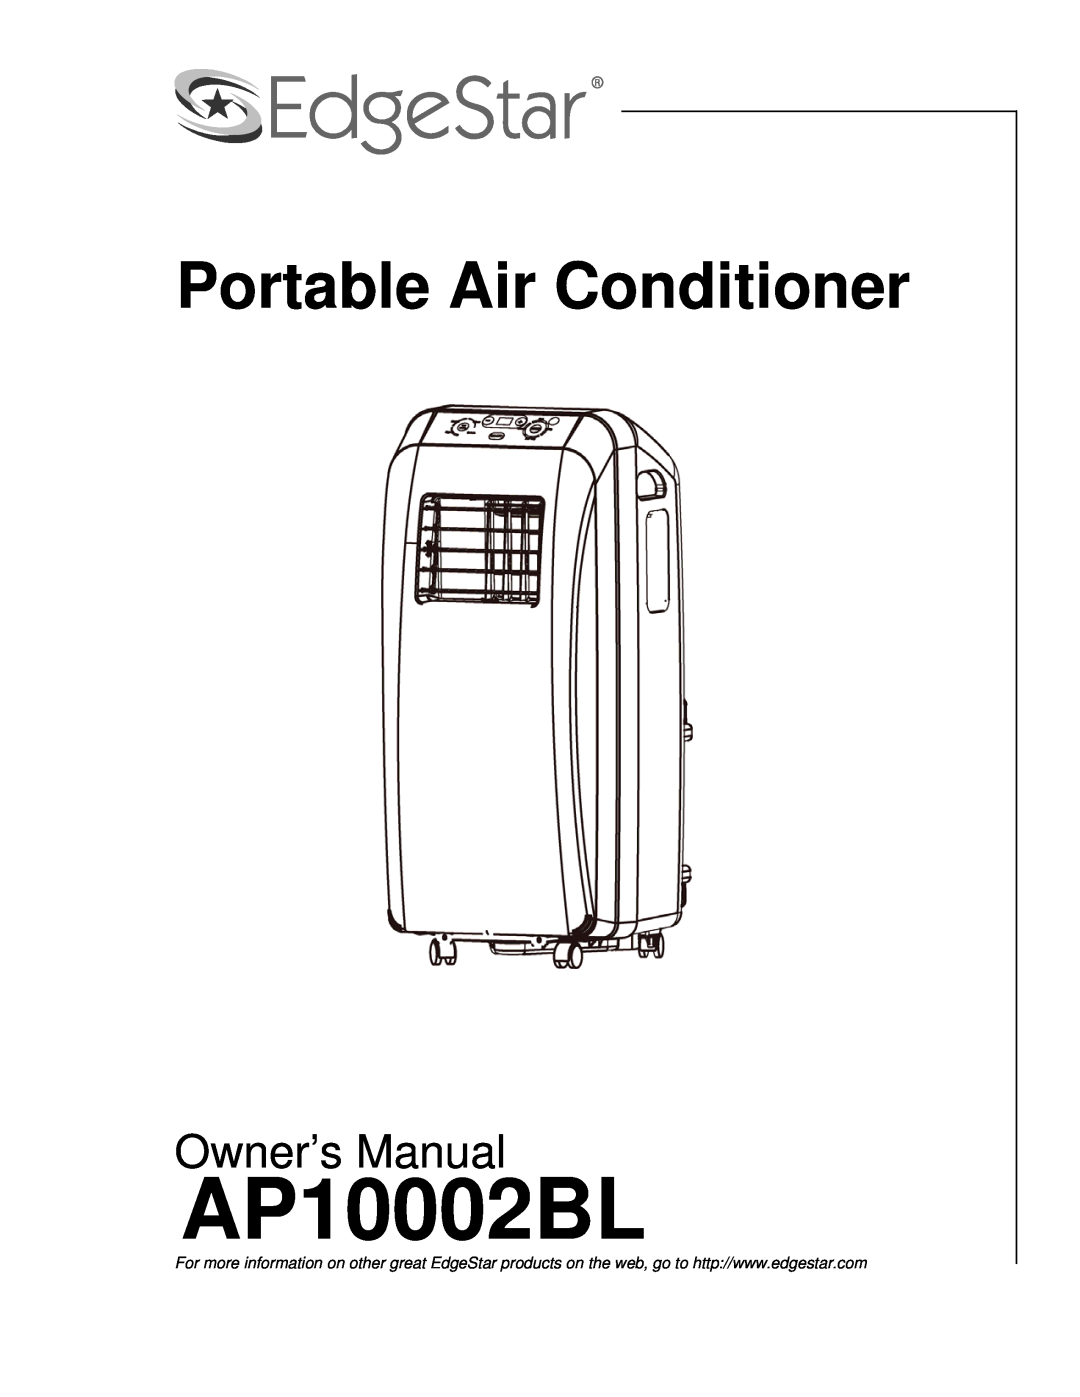 EdgeStar AP10002BL owner manual Portable Air Conditioner 